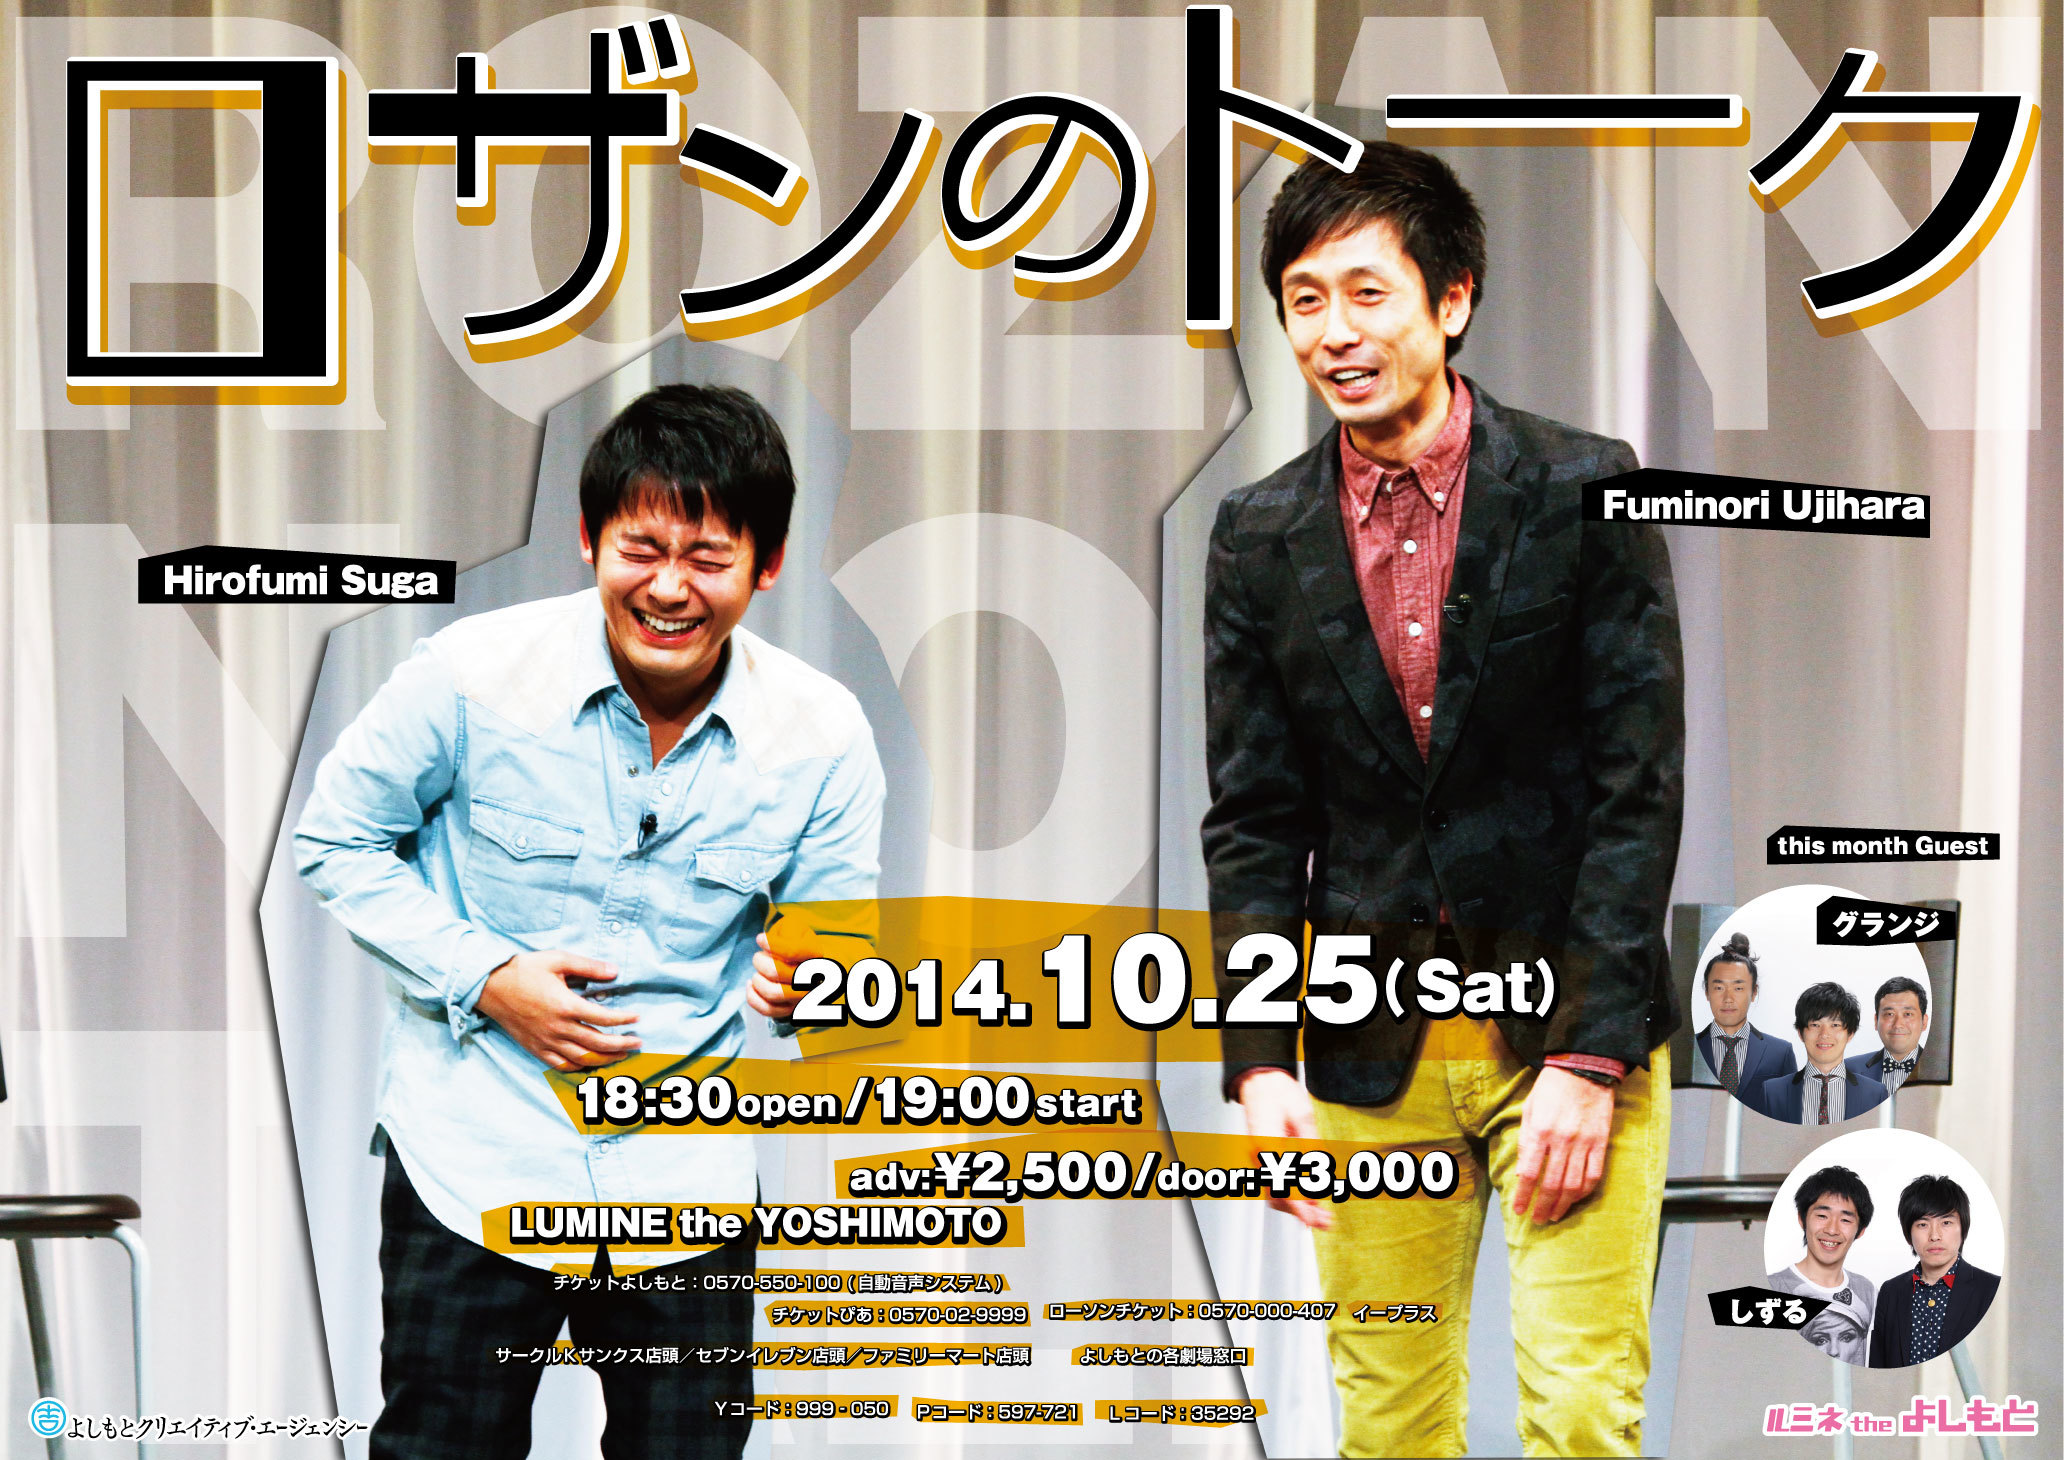 http://news.yoshimoto.co.jp/photos/uncategorized/2014/10/30/20141030190447-a71002a67a3fb4fefd5cc4d9493374f0169e4cf8.jpg